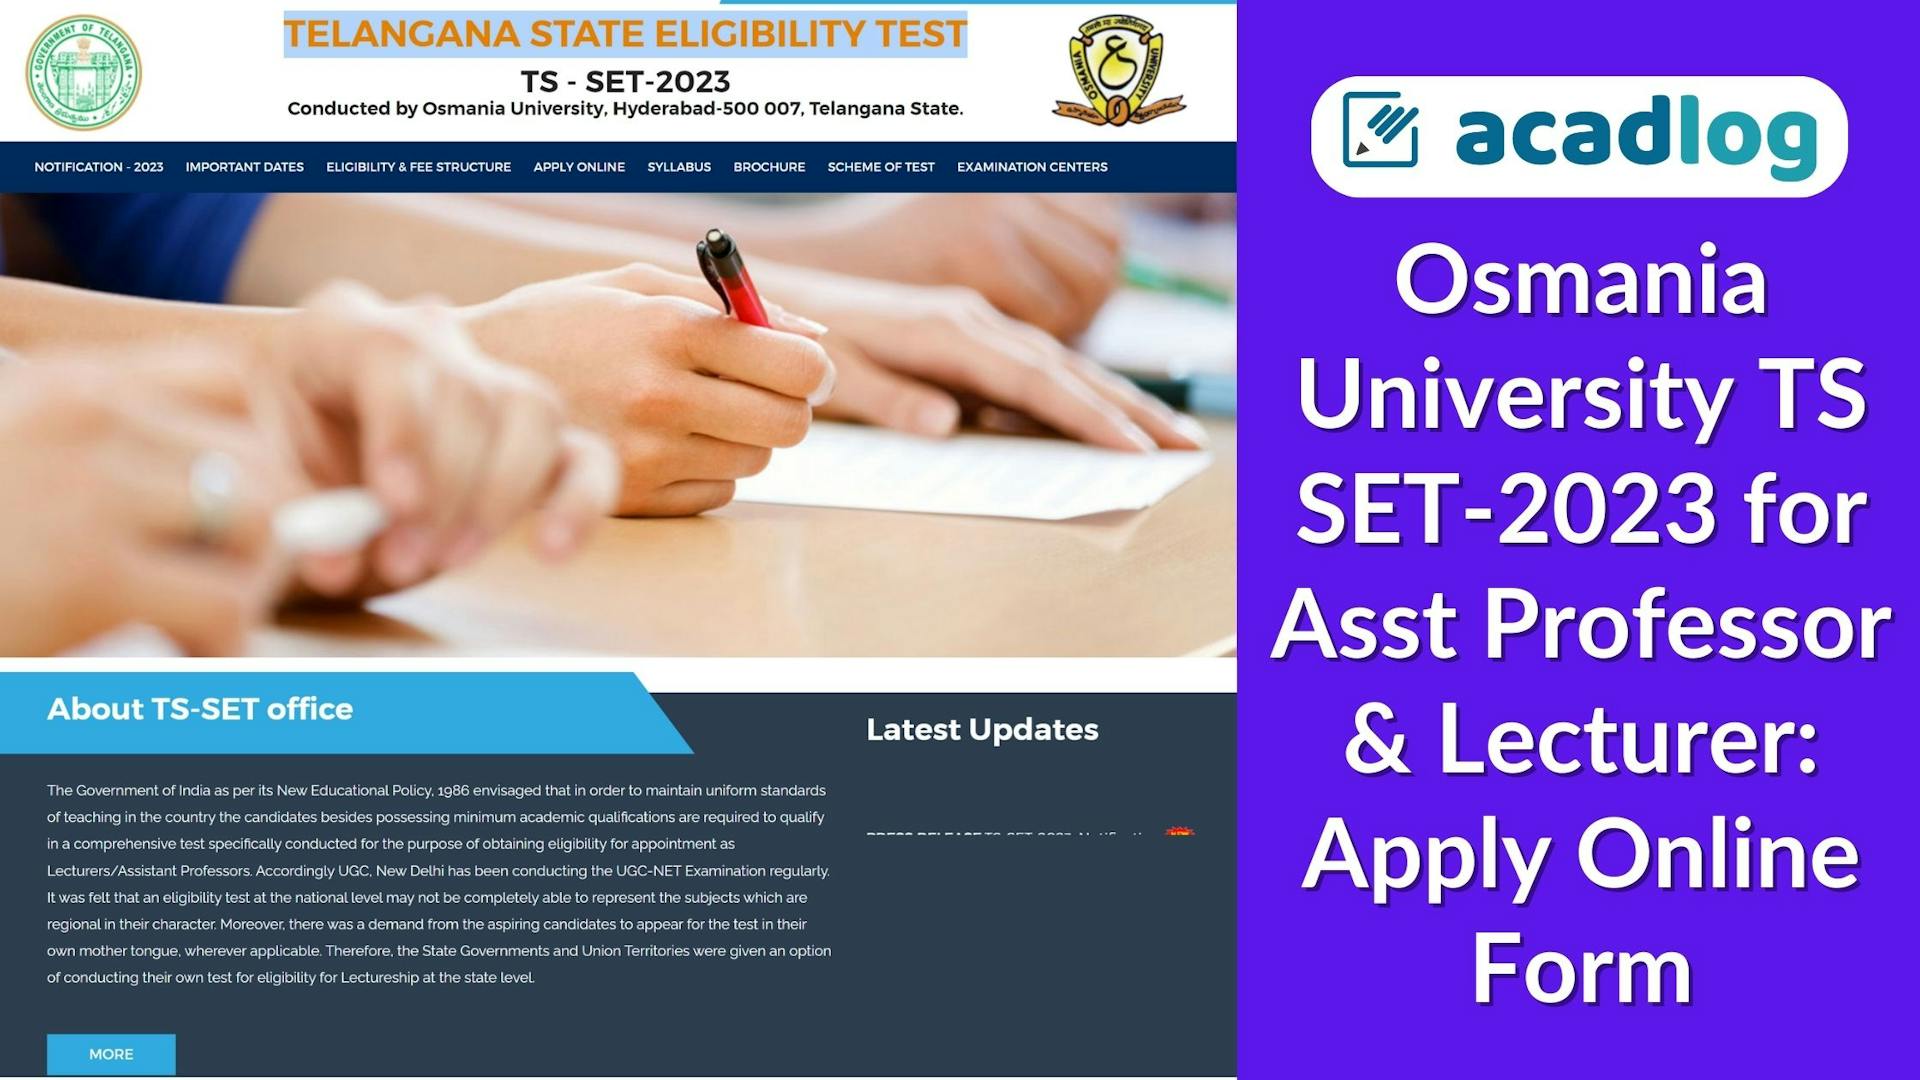 Osmania University TS SET-2023 for Asst Professor & Lecturer: Apply Online Form